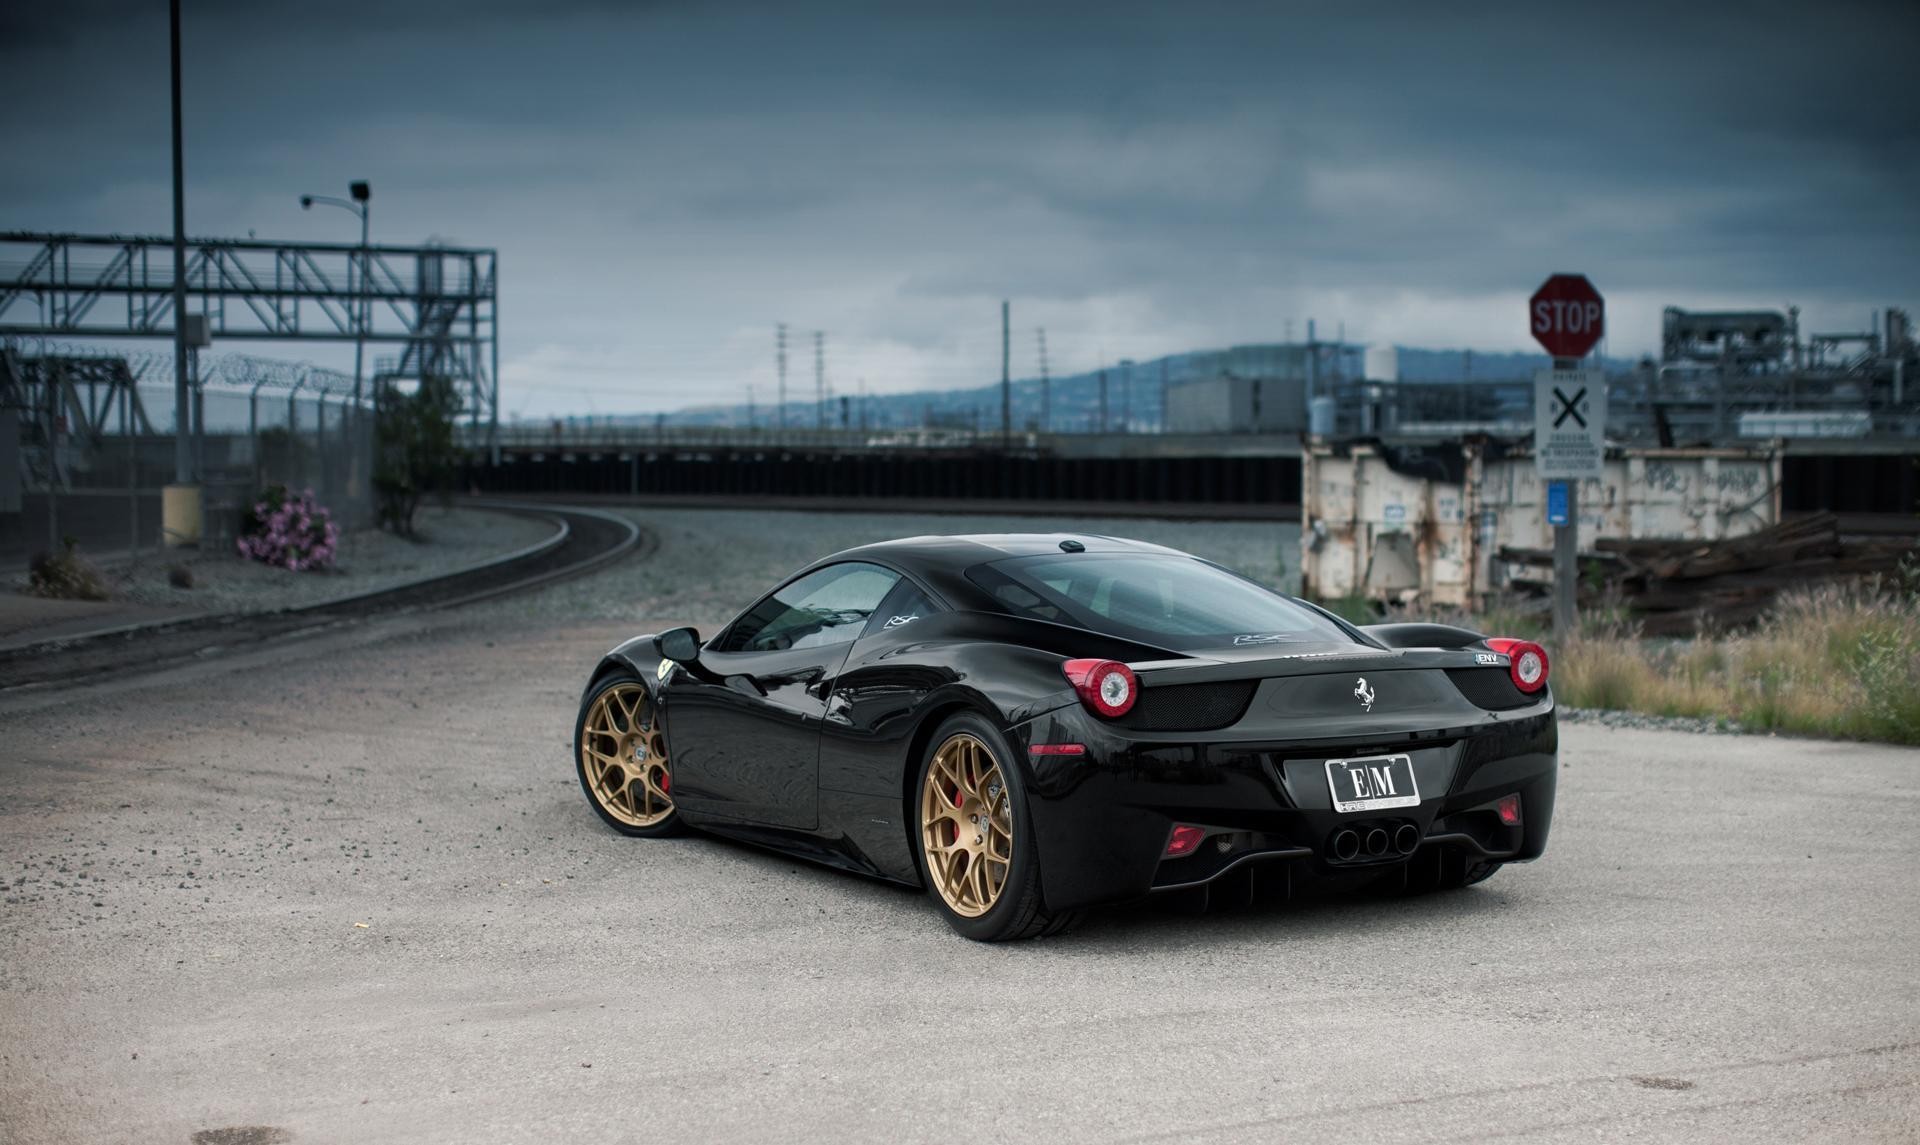 black, cars, supercars, Ferrari 458 Italia - desktop wallpaper